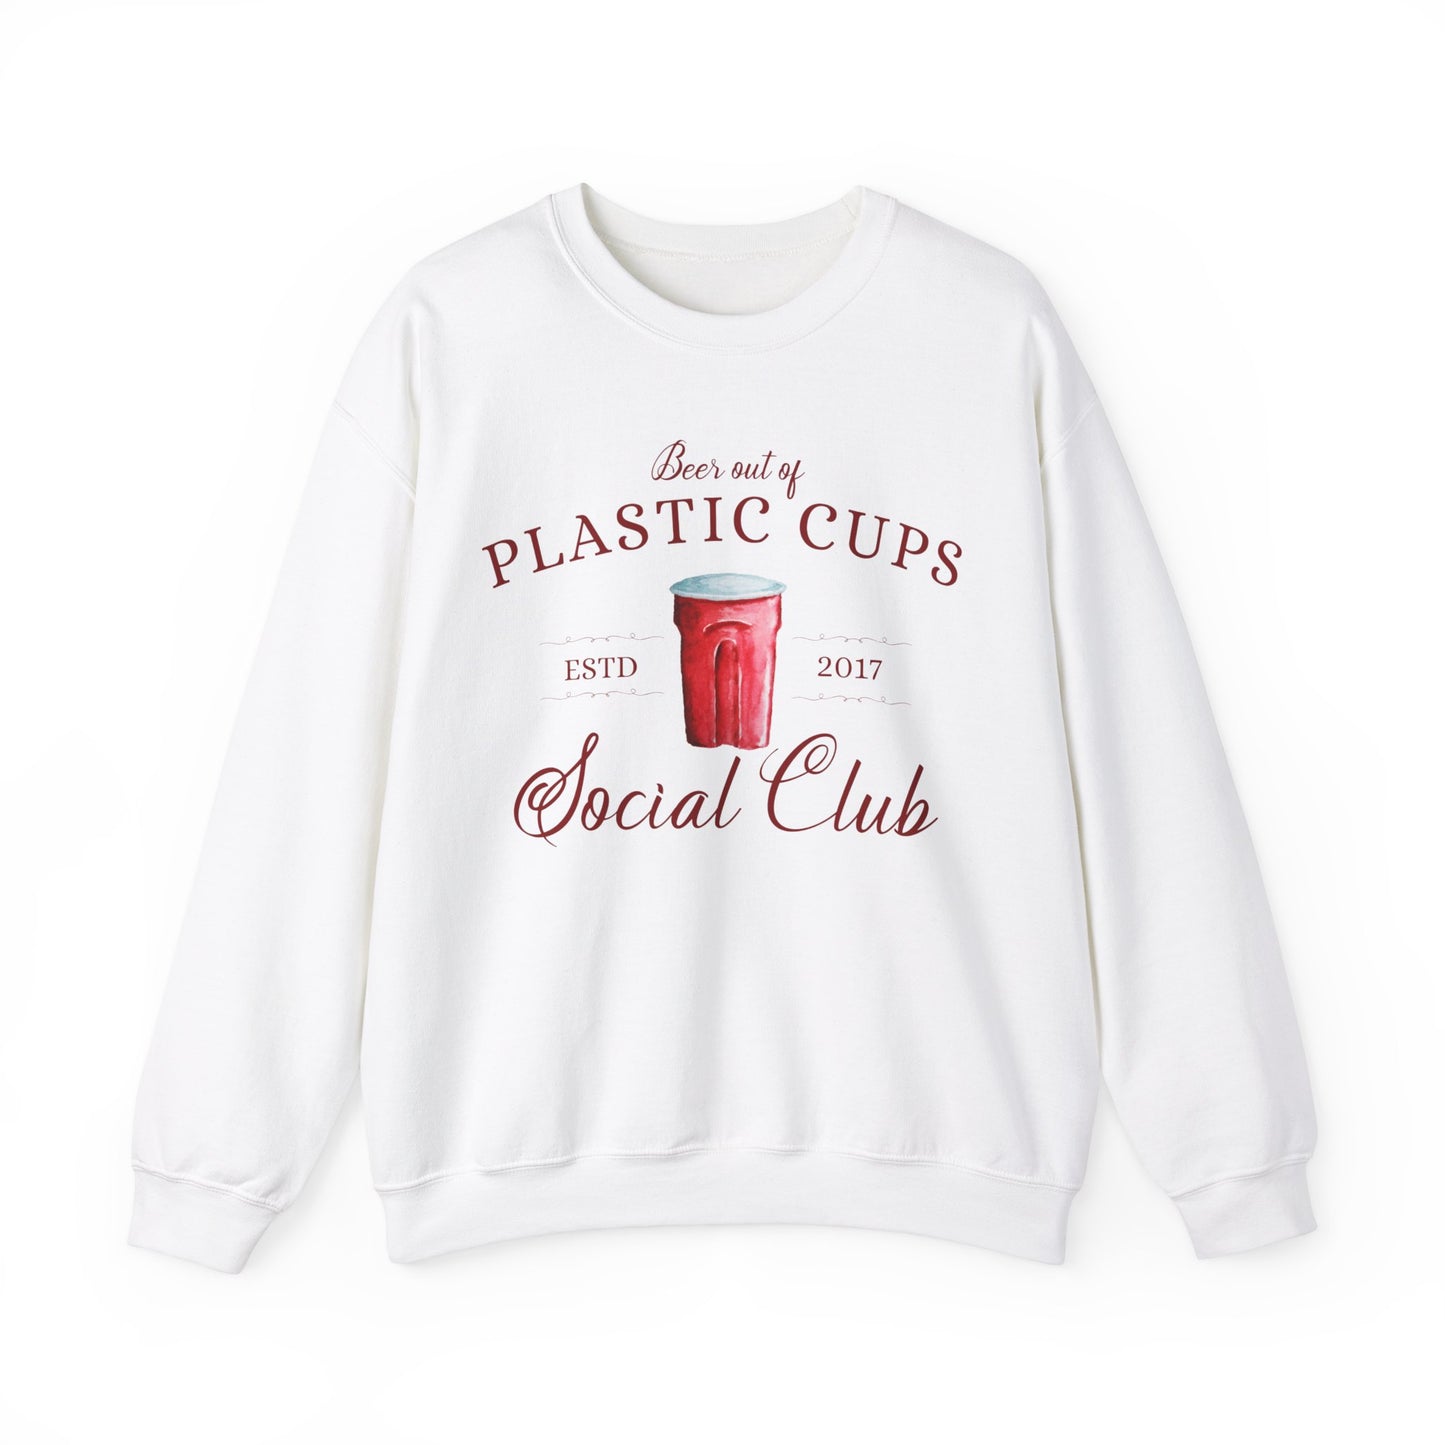 Beer Out of Plastic Cups Sweatshirt